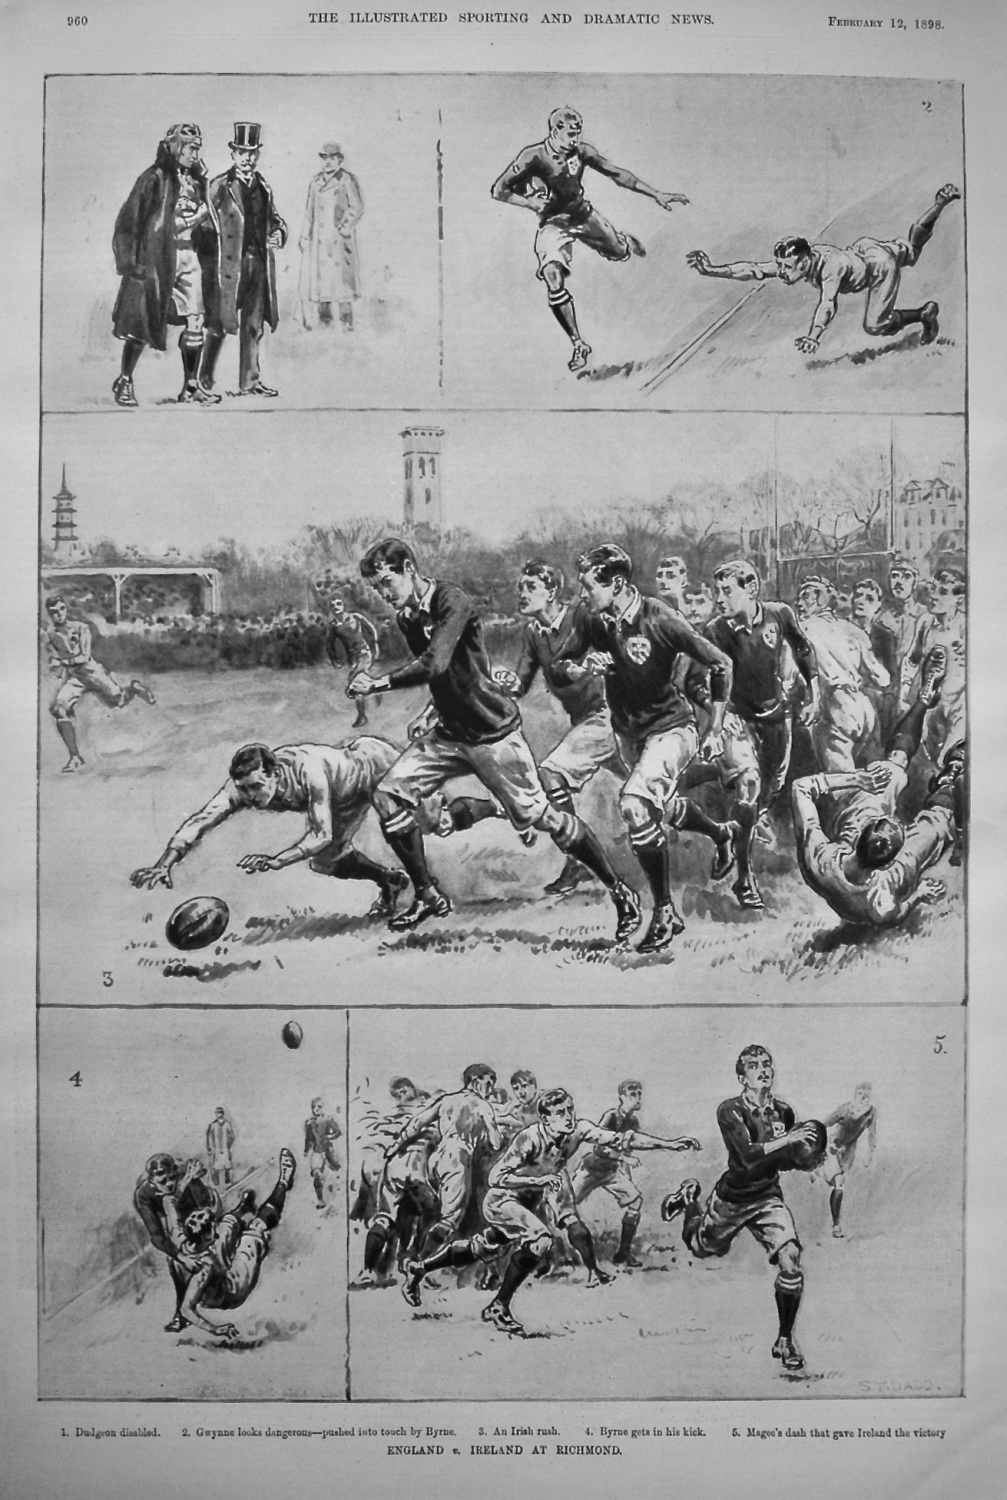 England v. Ireland at Richmond. (Rugby) 1898.